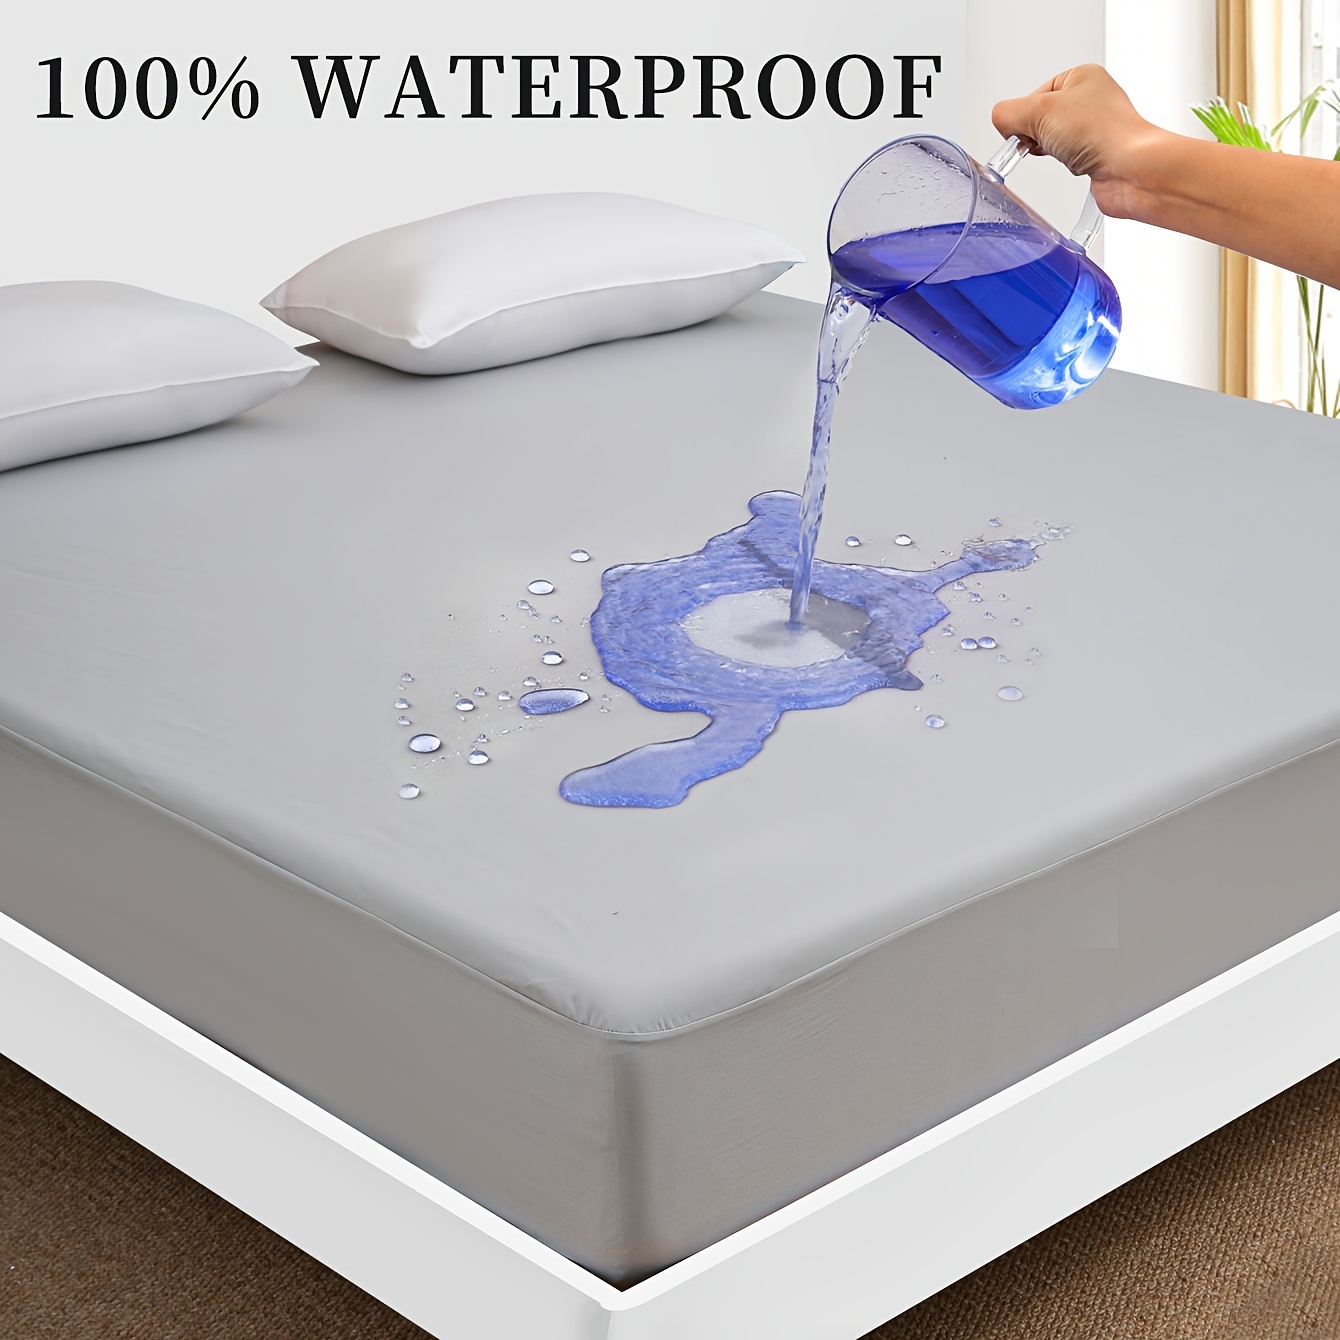 Queen Mattress Protector, Waterproof Mattress Cover Bed Protector